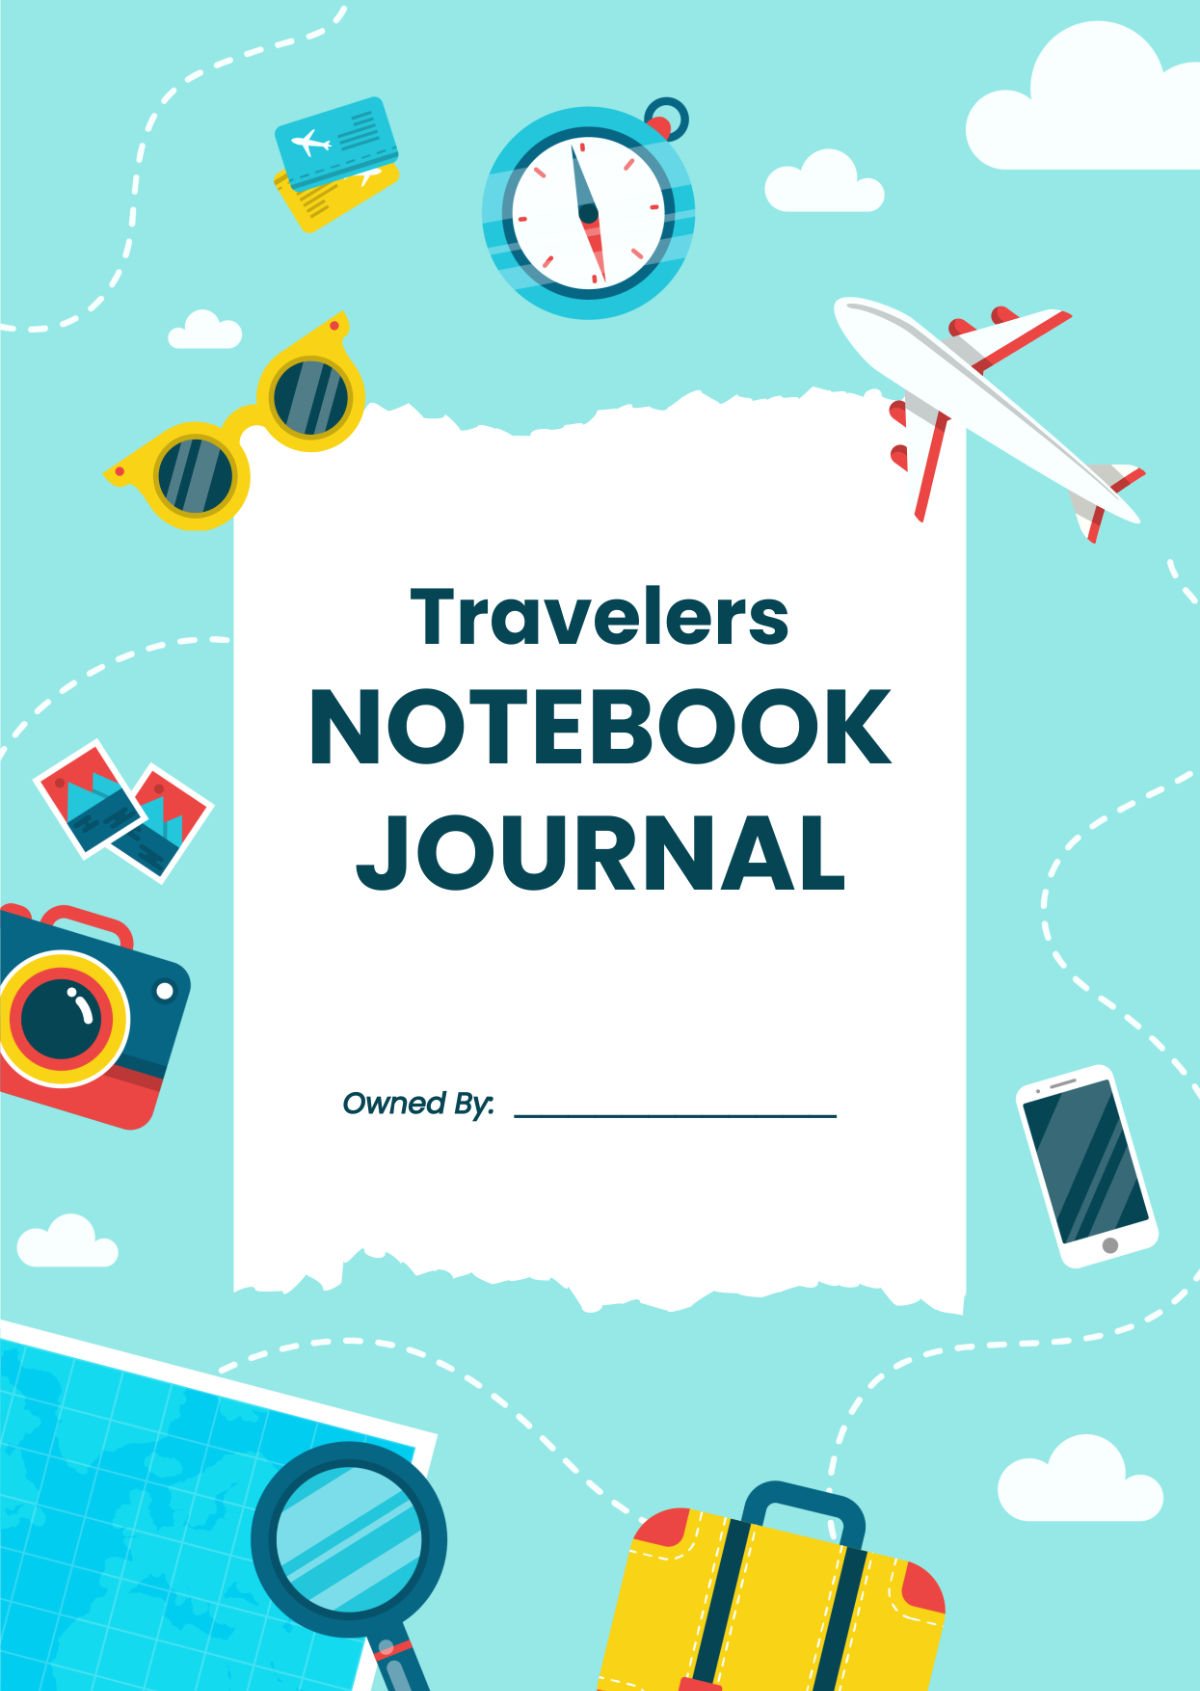 Travelers Notebook Journals Template